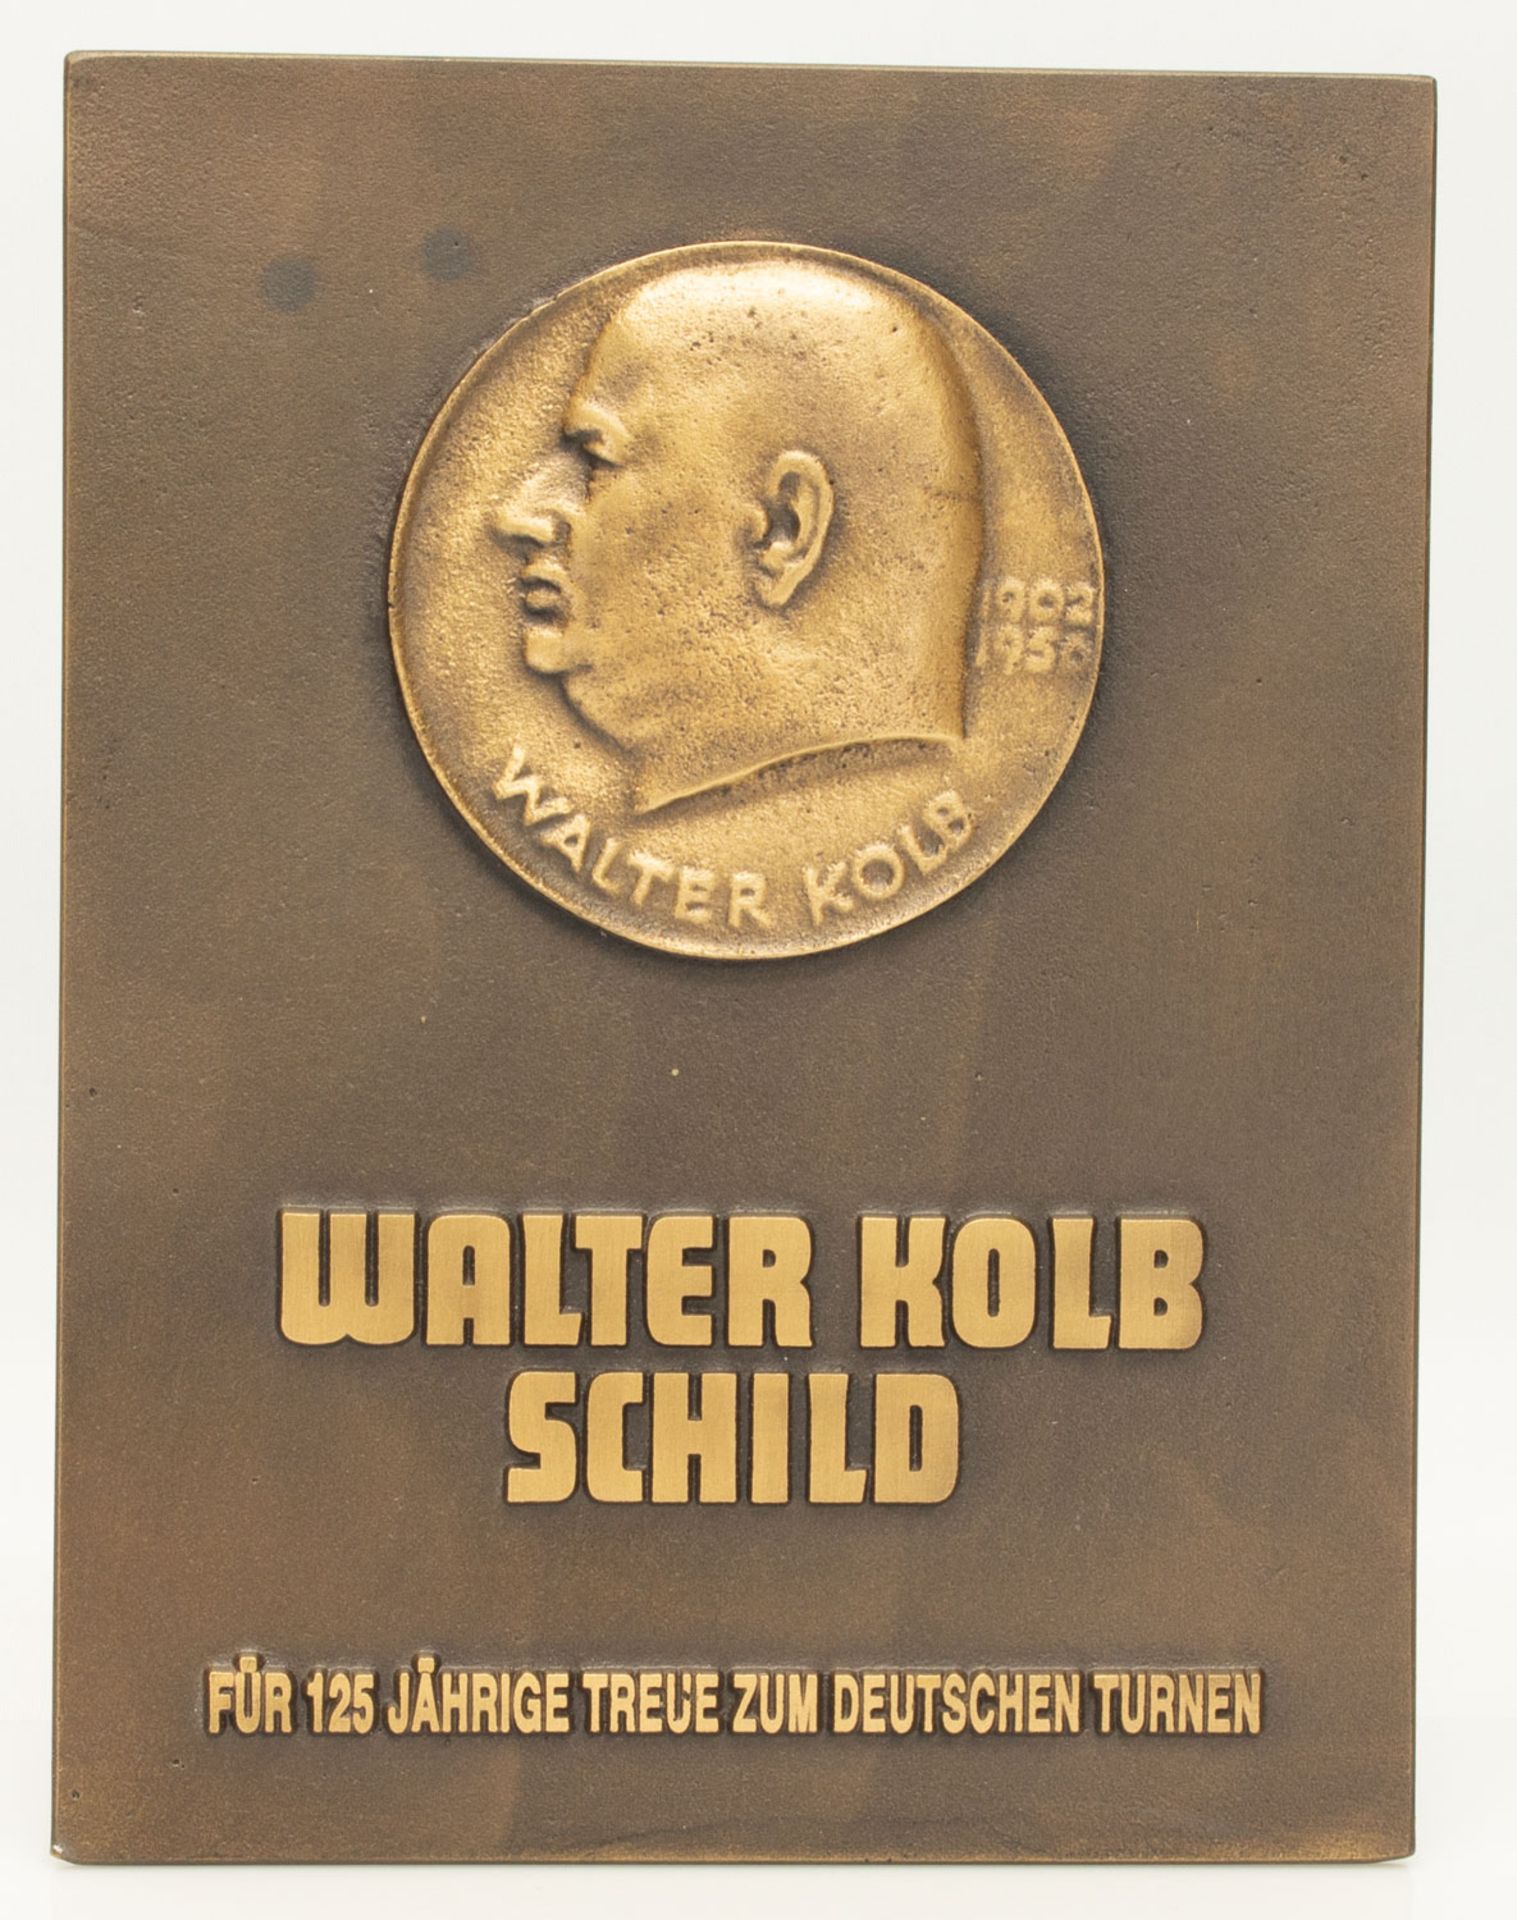 Walter Kolb Schild